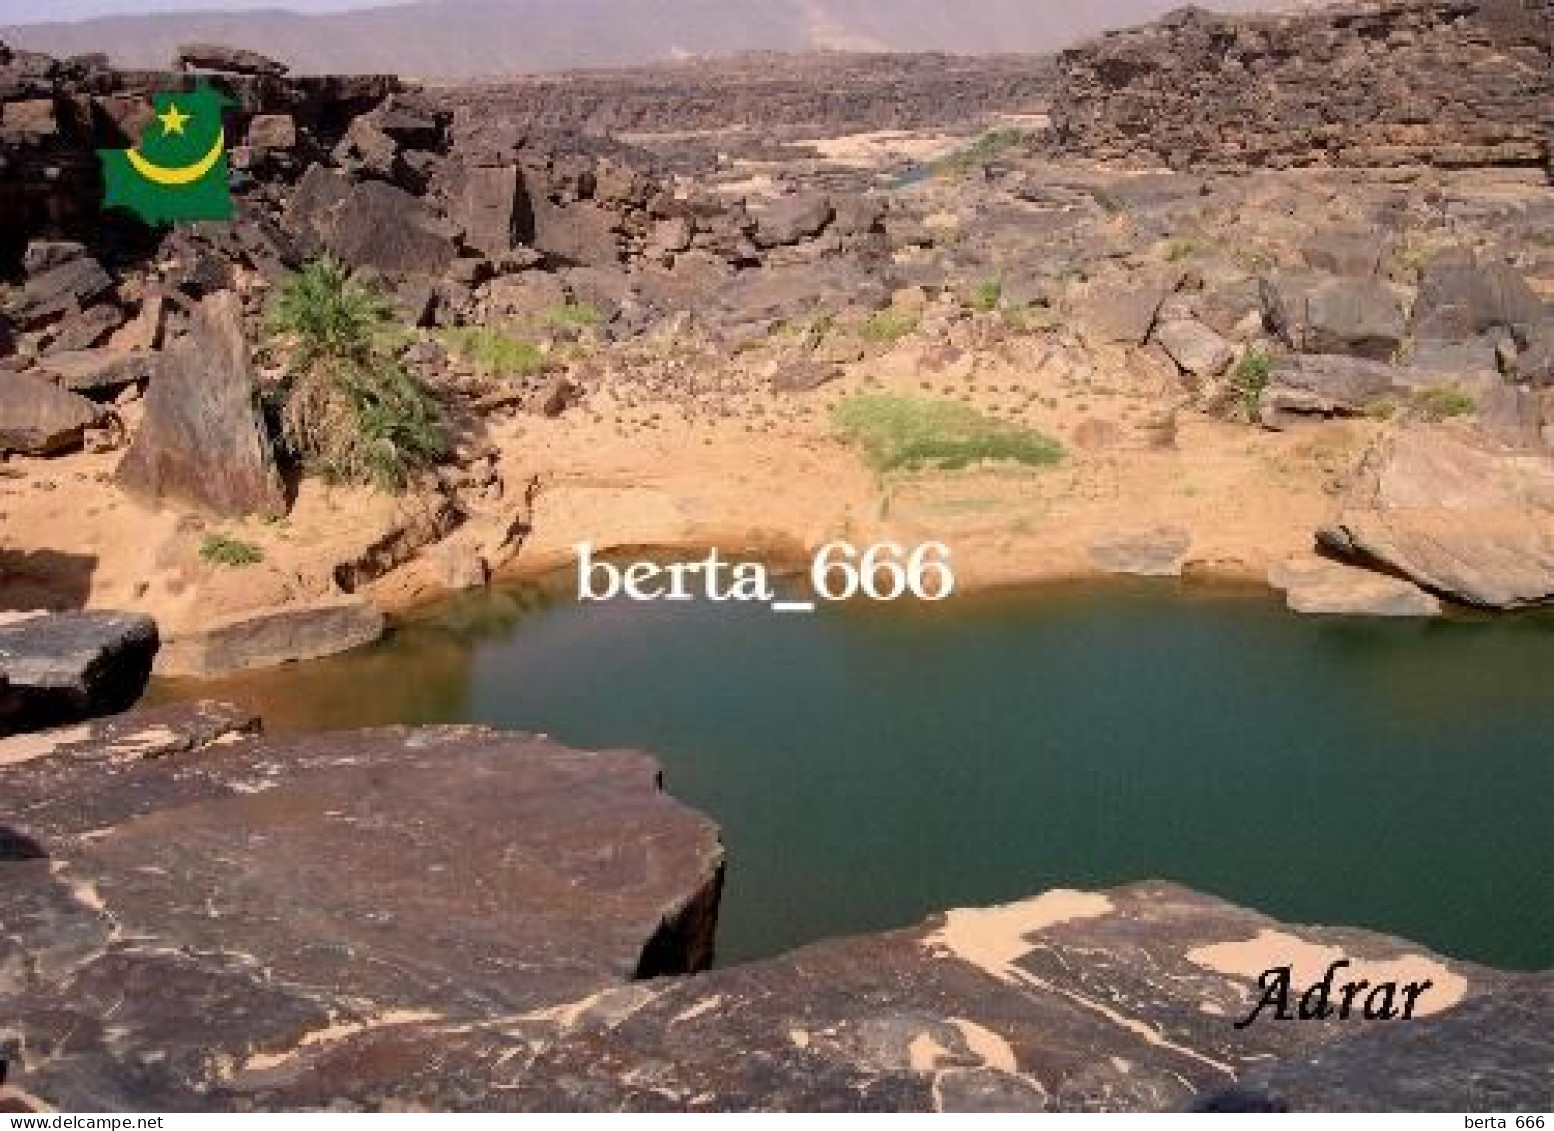 Mauritania Adrar Plateau Landscape New Postcard - Mauretanien